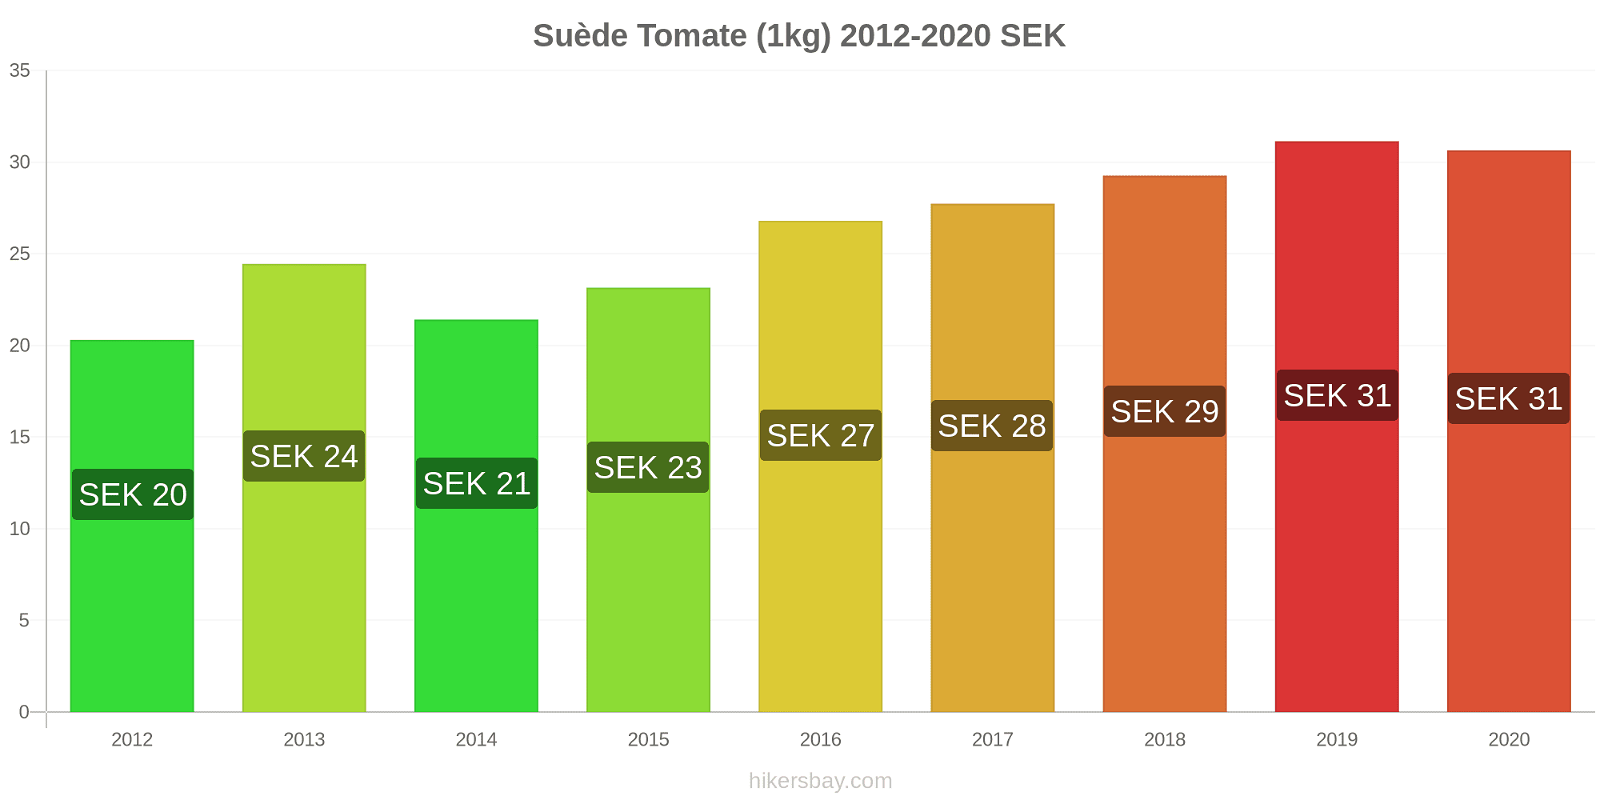 Suède changements de prix Tomate (1kg) hikersbay.com